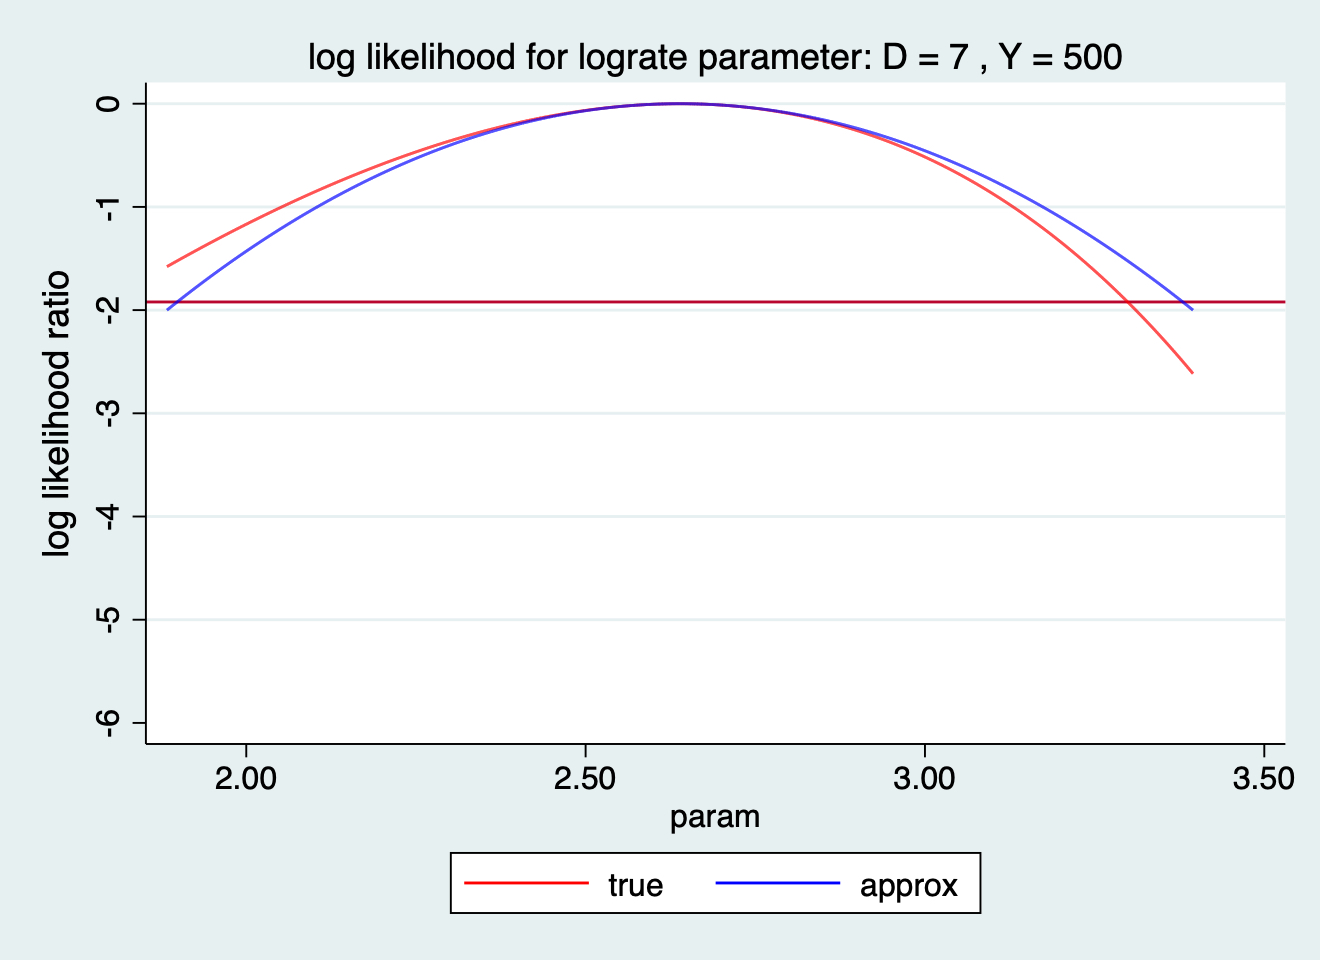 log likelihood ratio for lograte paramter: D=7 Y=500